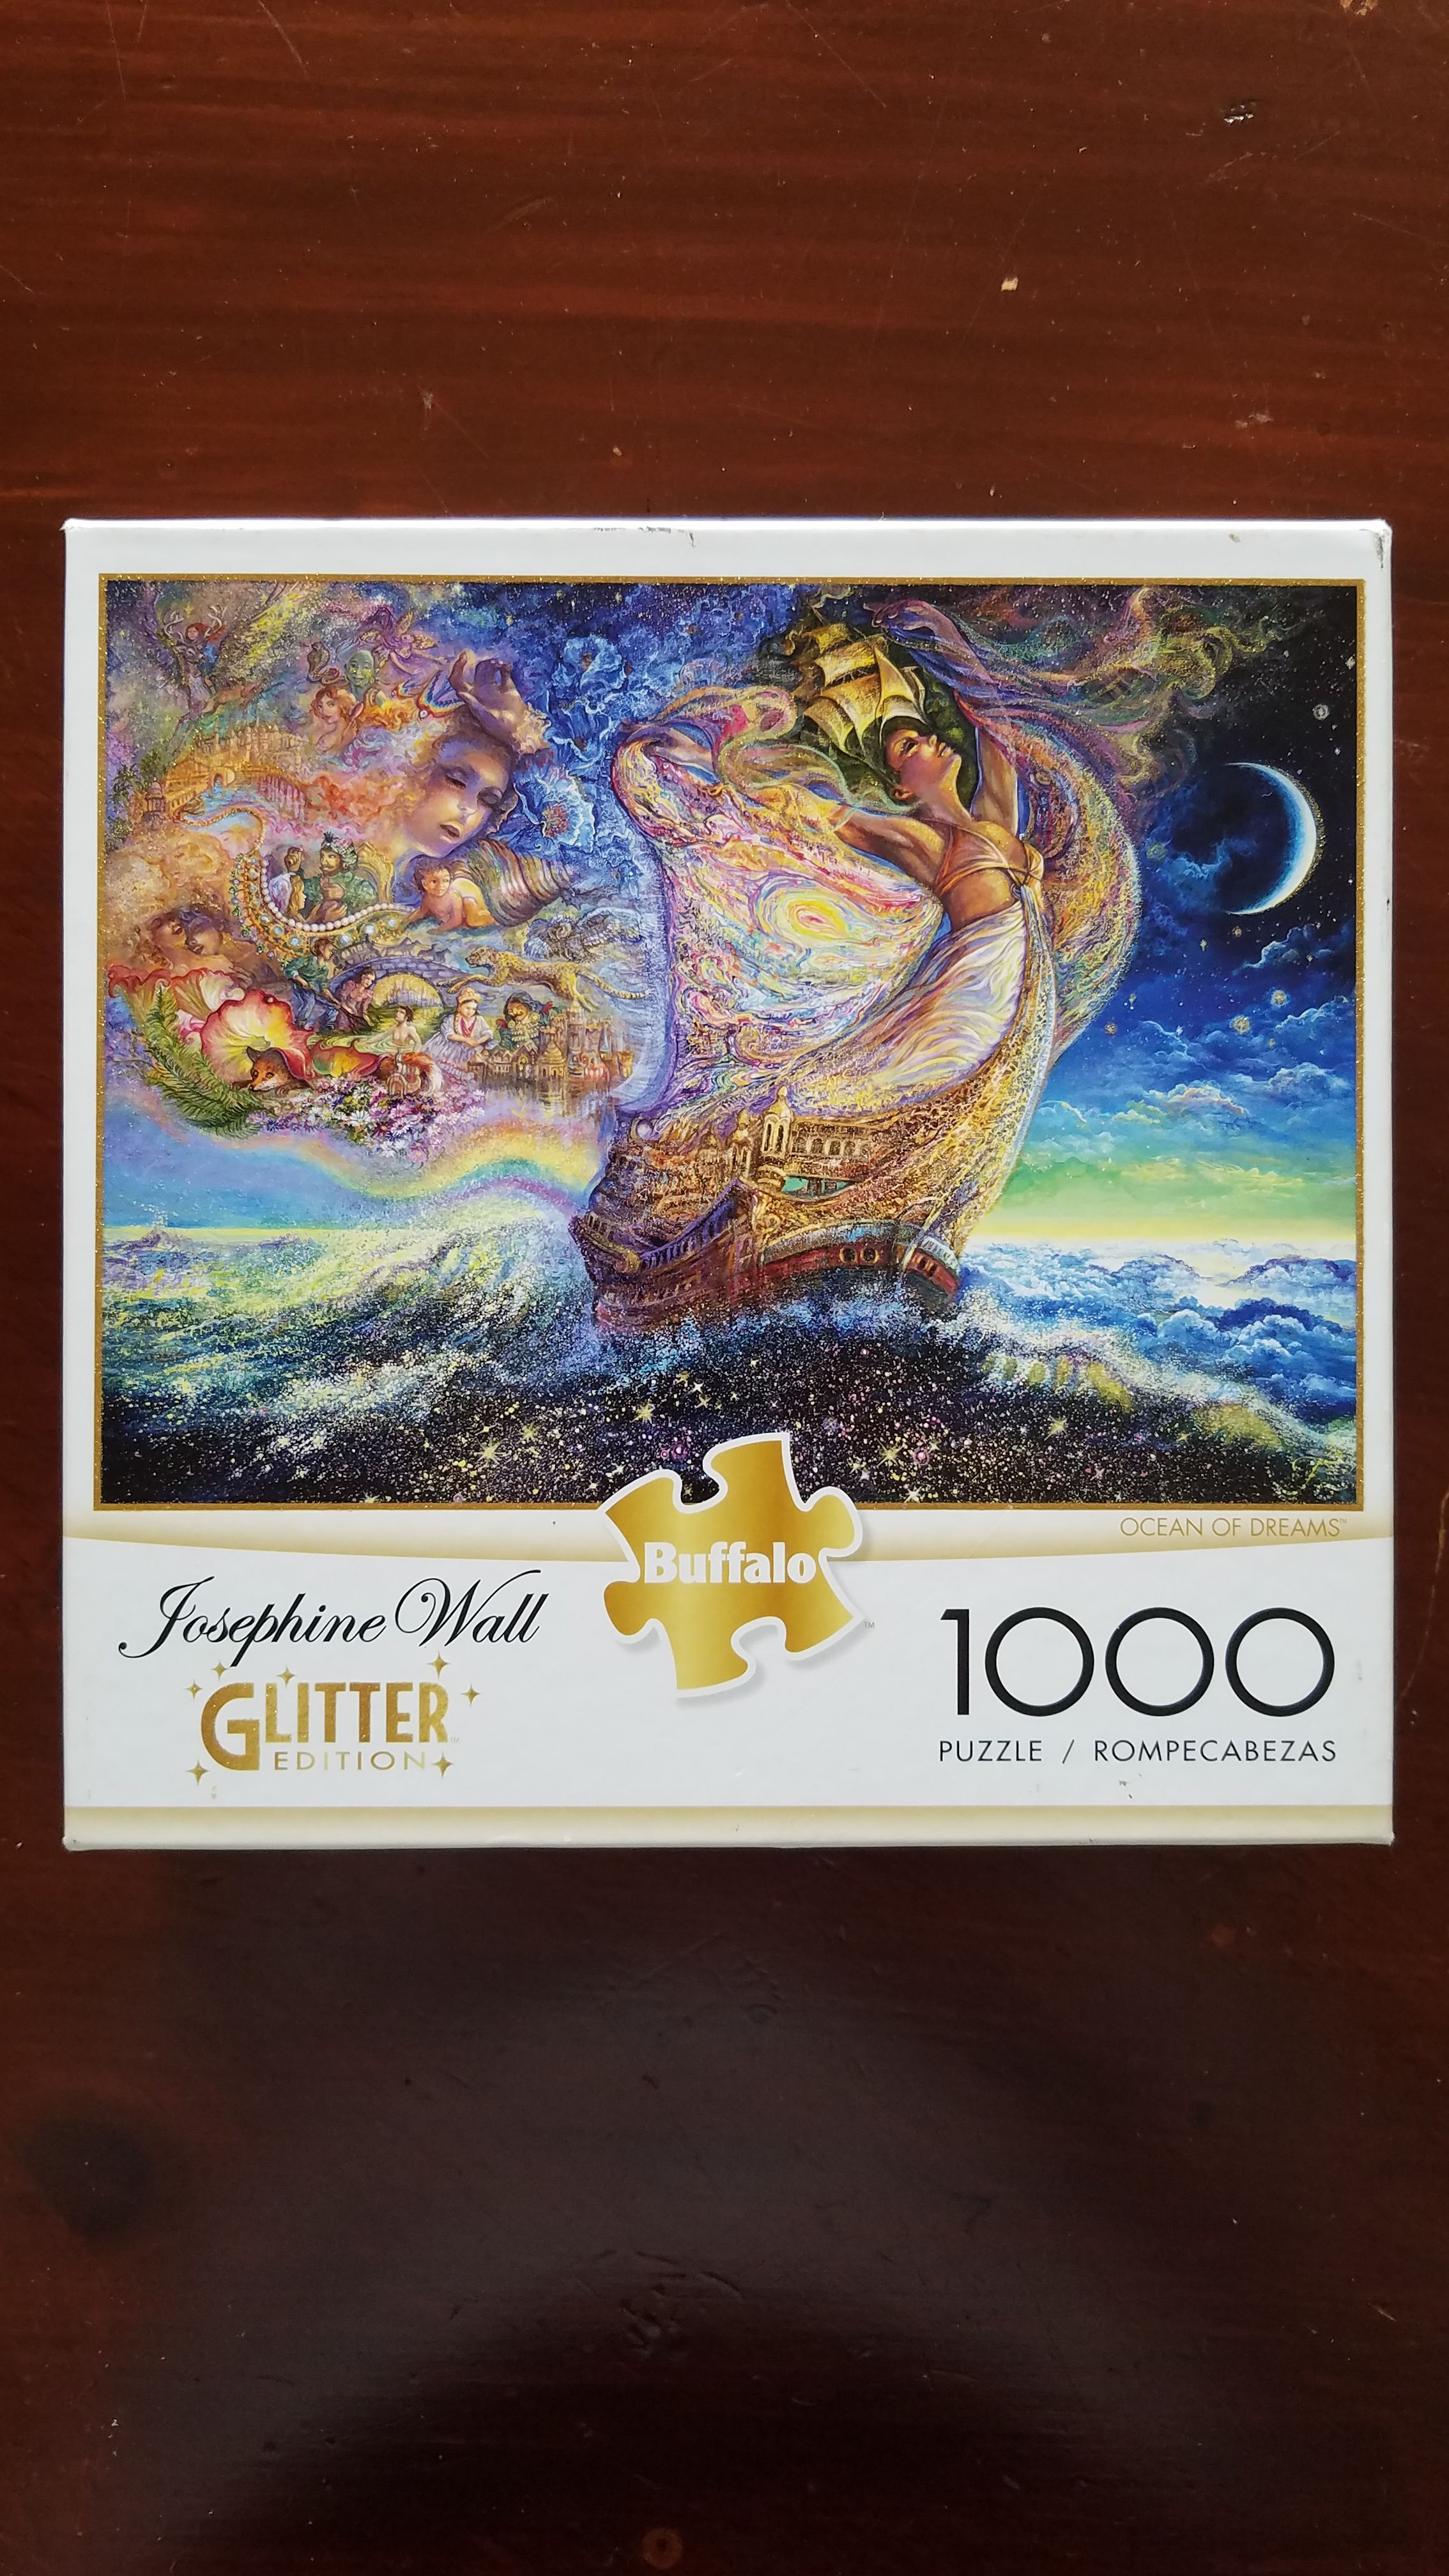 Josephine Wall Glitter Edition Buffalo puzzle 1000 pieces Negotiable